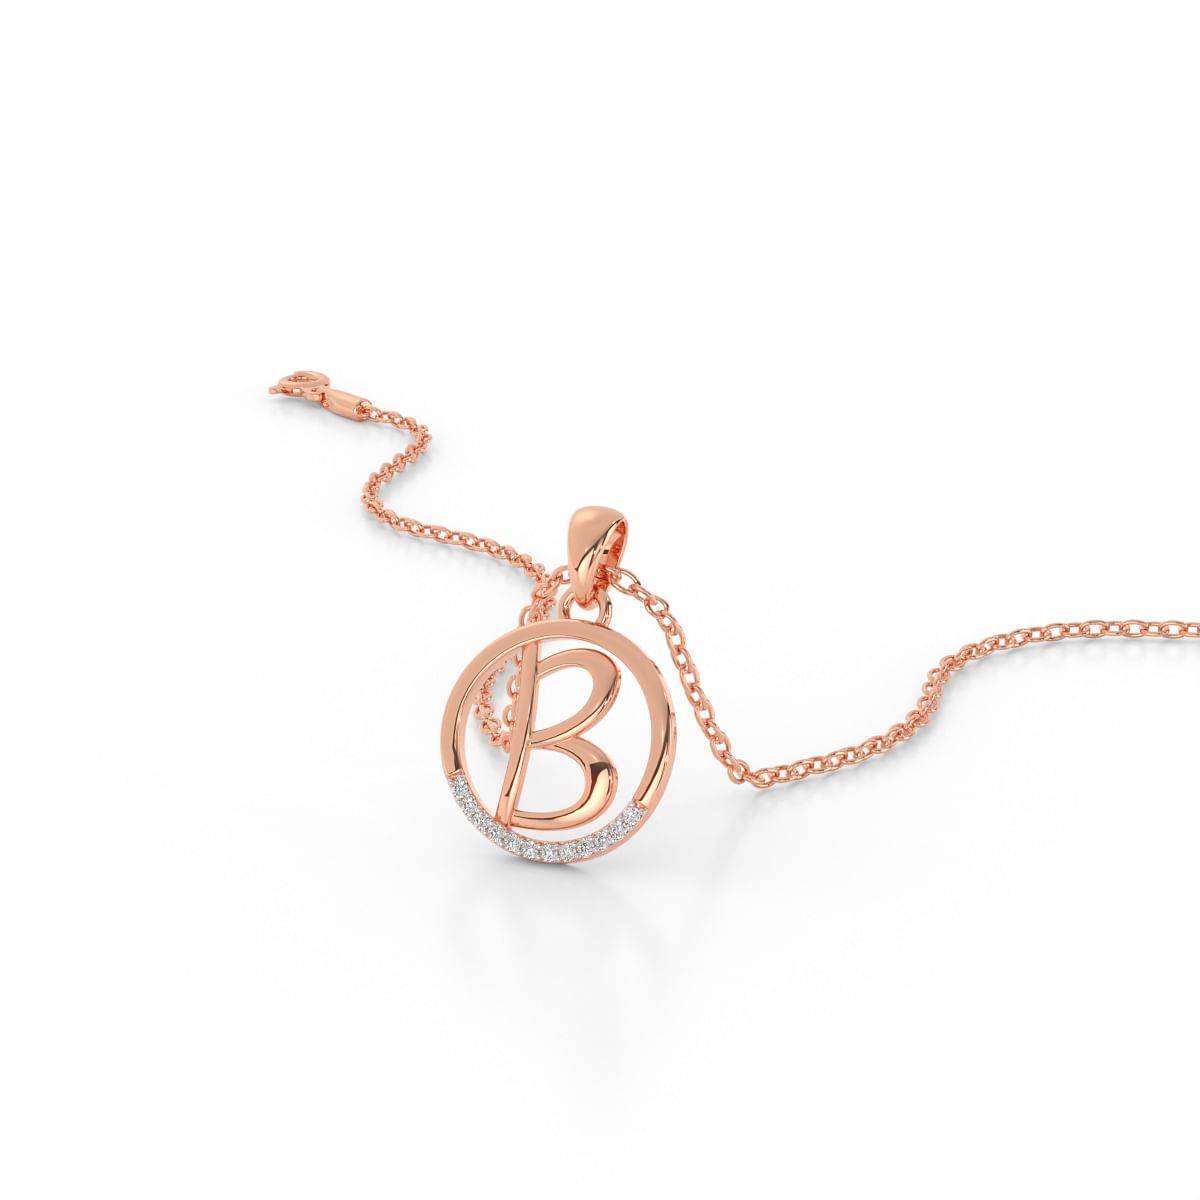 B Letter Round Design Rose Gold Diamond Pendant